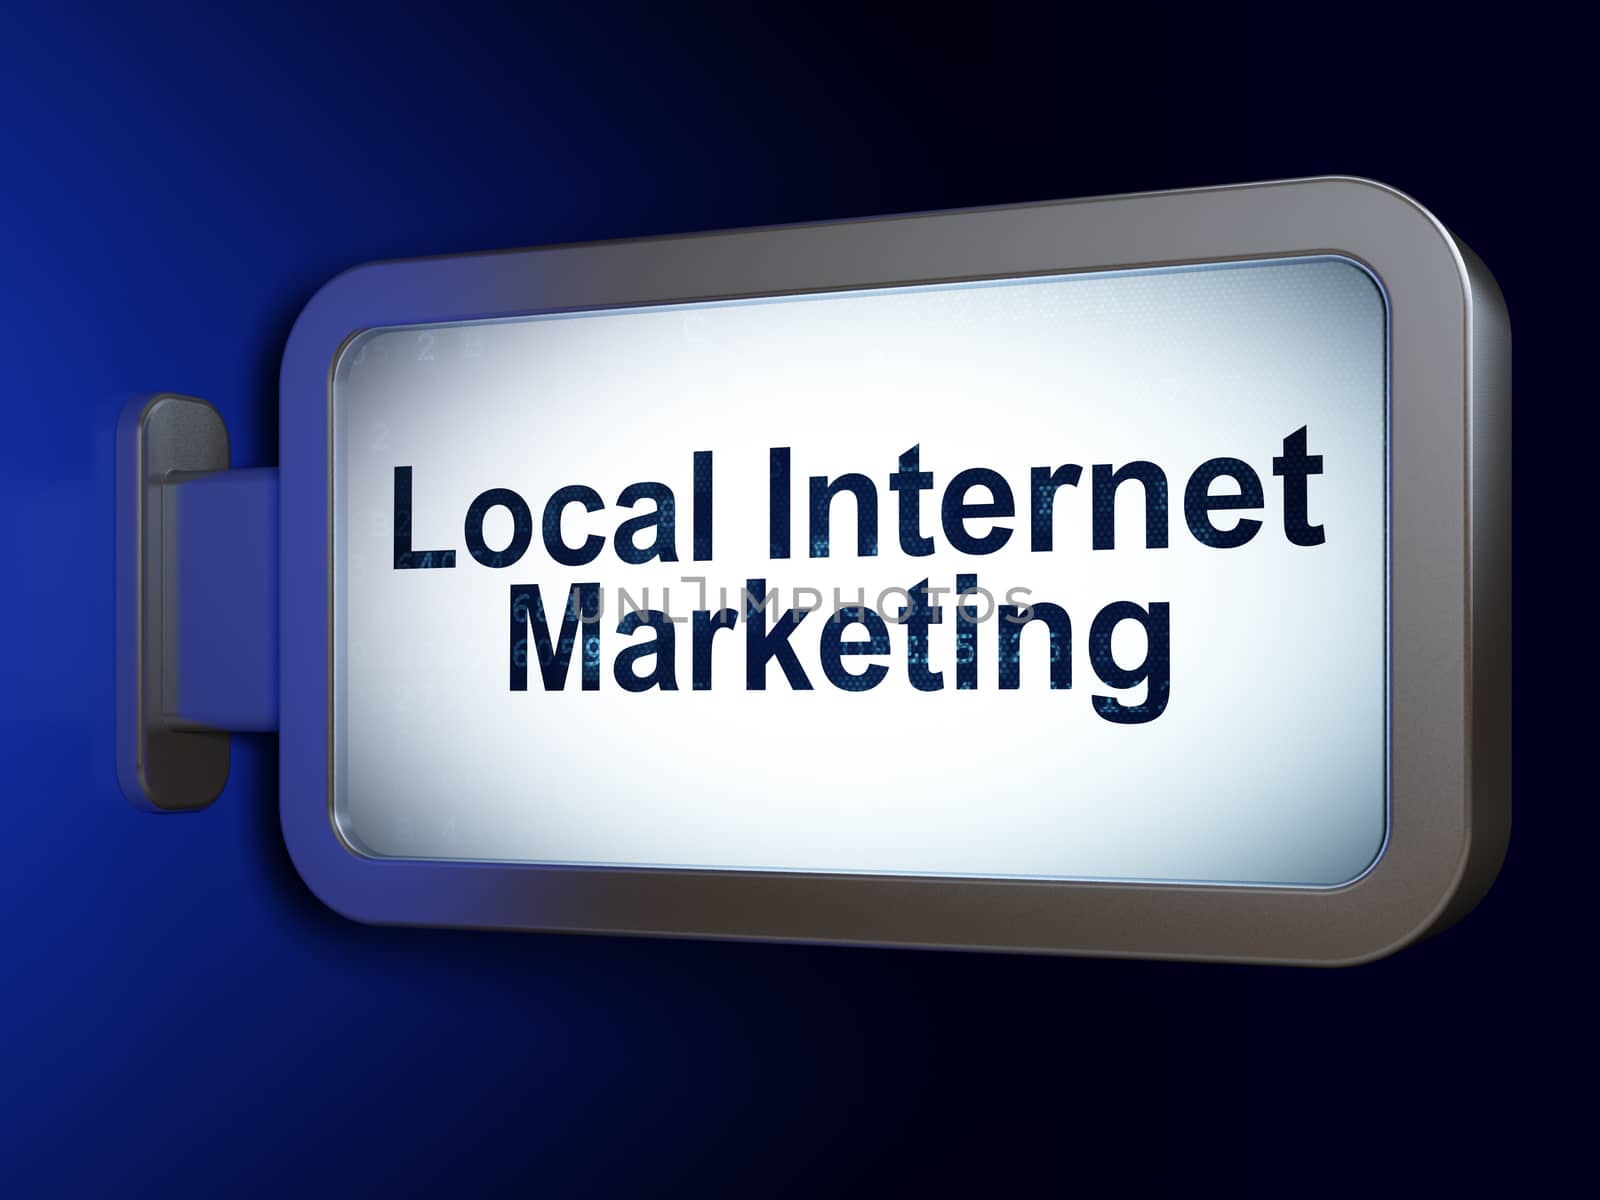 Marketing concept: Local Internet Marketing on advertising billboard background, 3D rendering